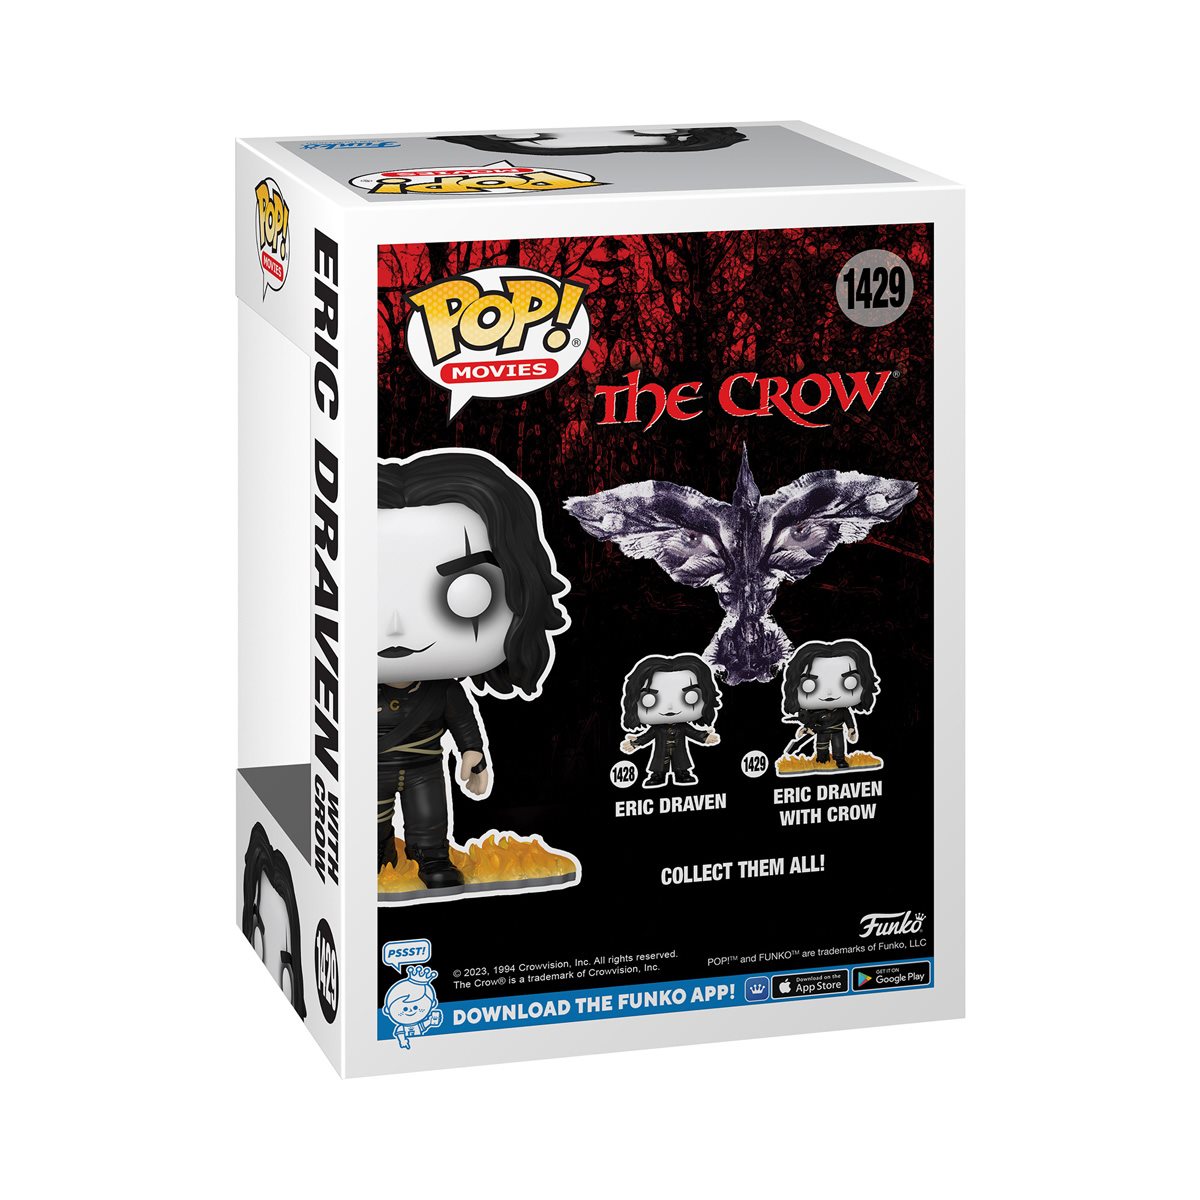 Funko Pop! The Crow - Eric Draven with Crow